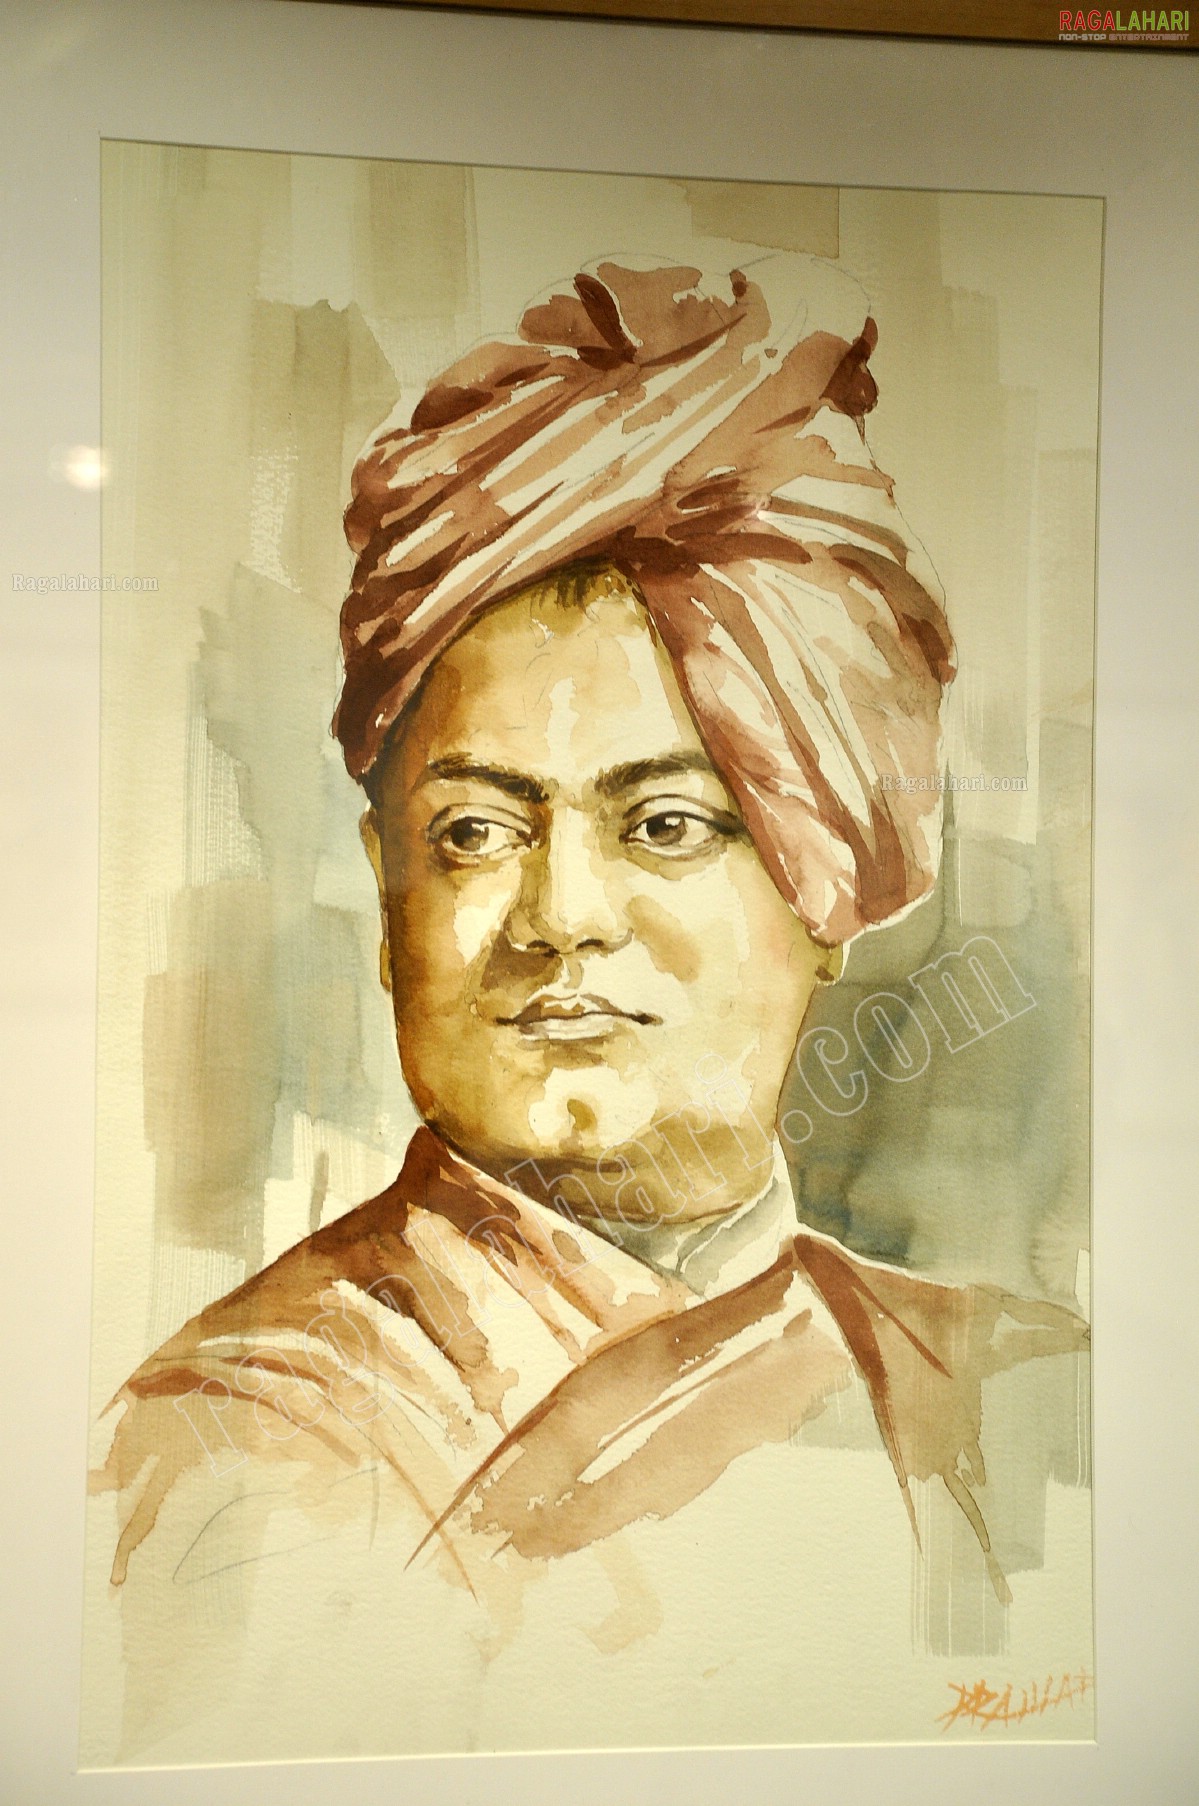 Dr.K. Prahlad Art Gallery